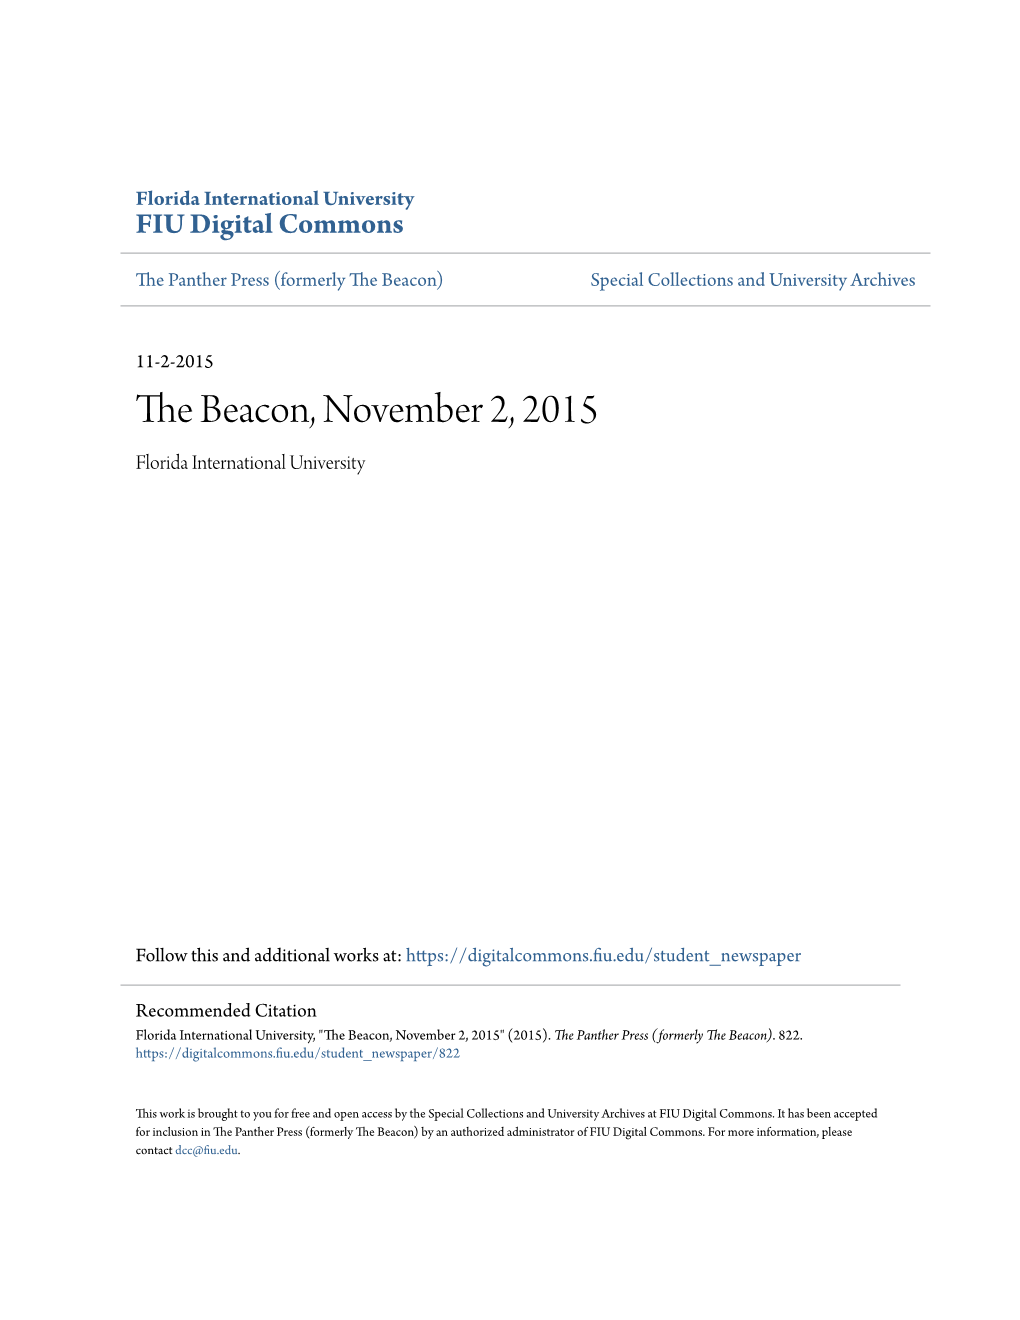 The Beacon, November 2, 2015 Florida International University